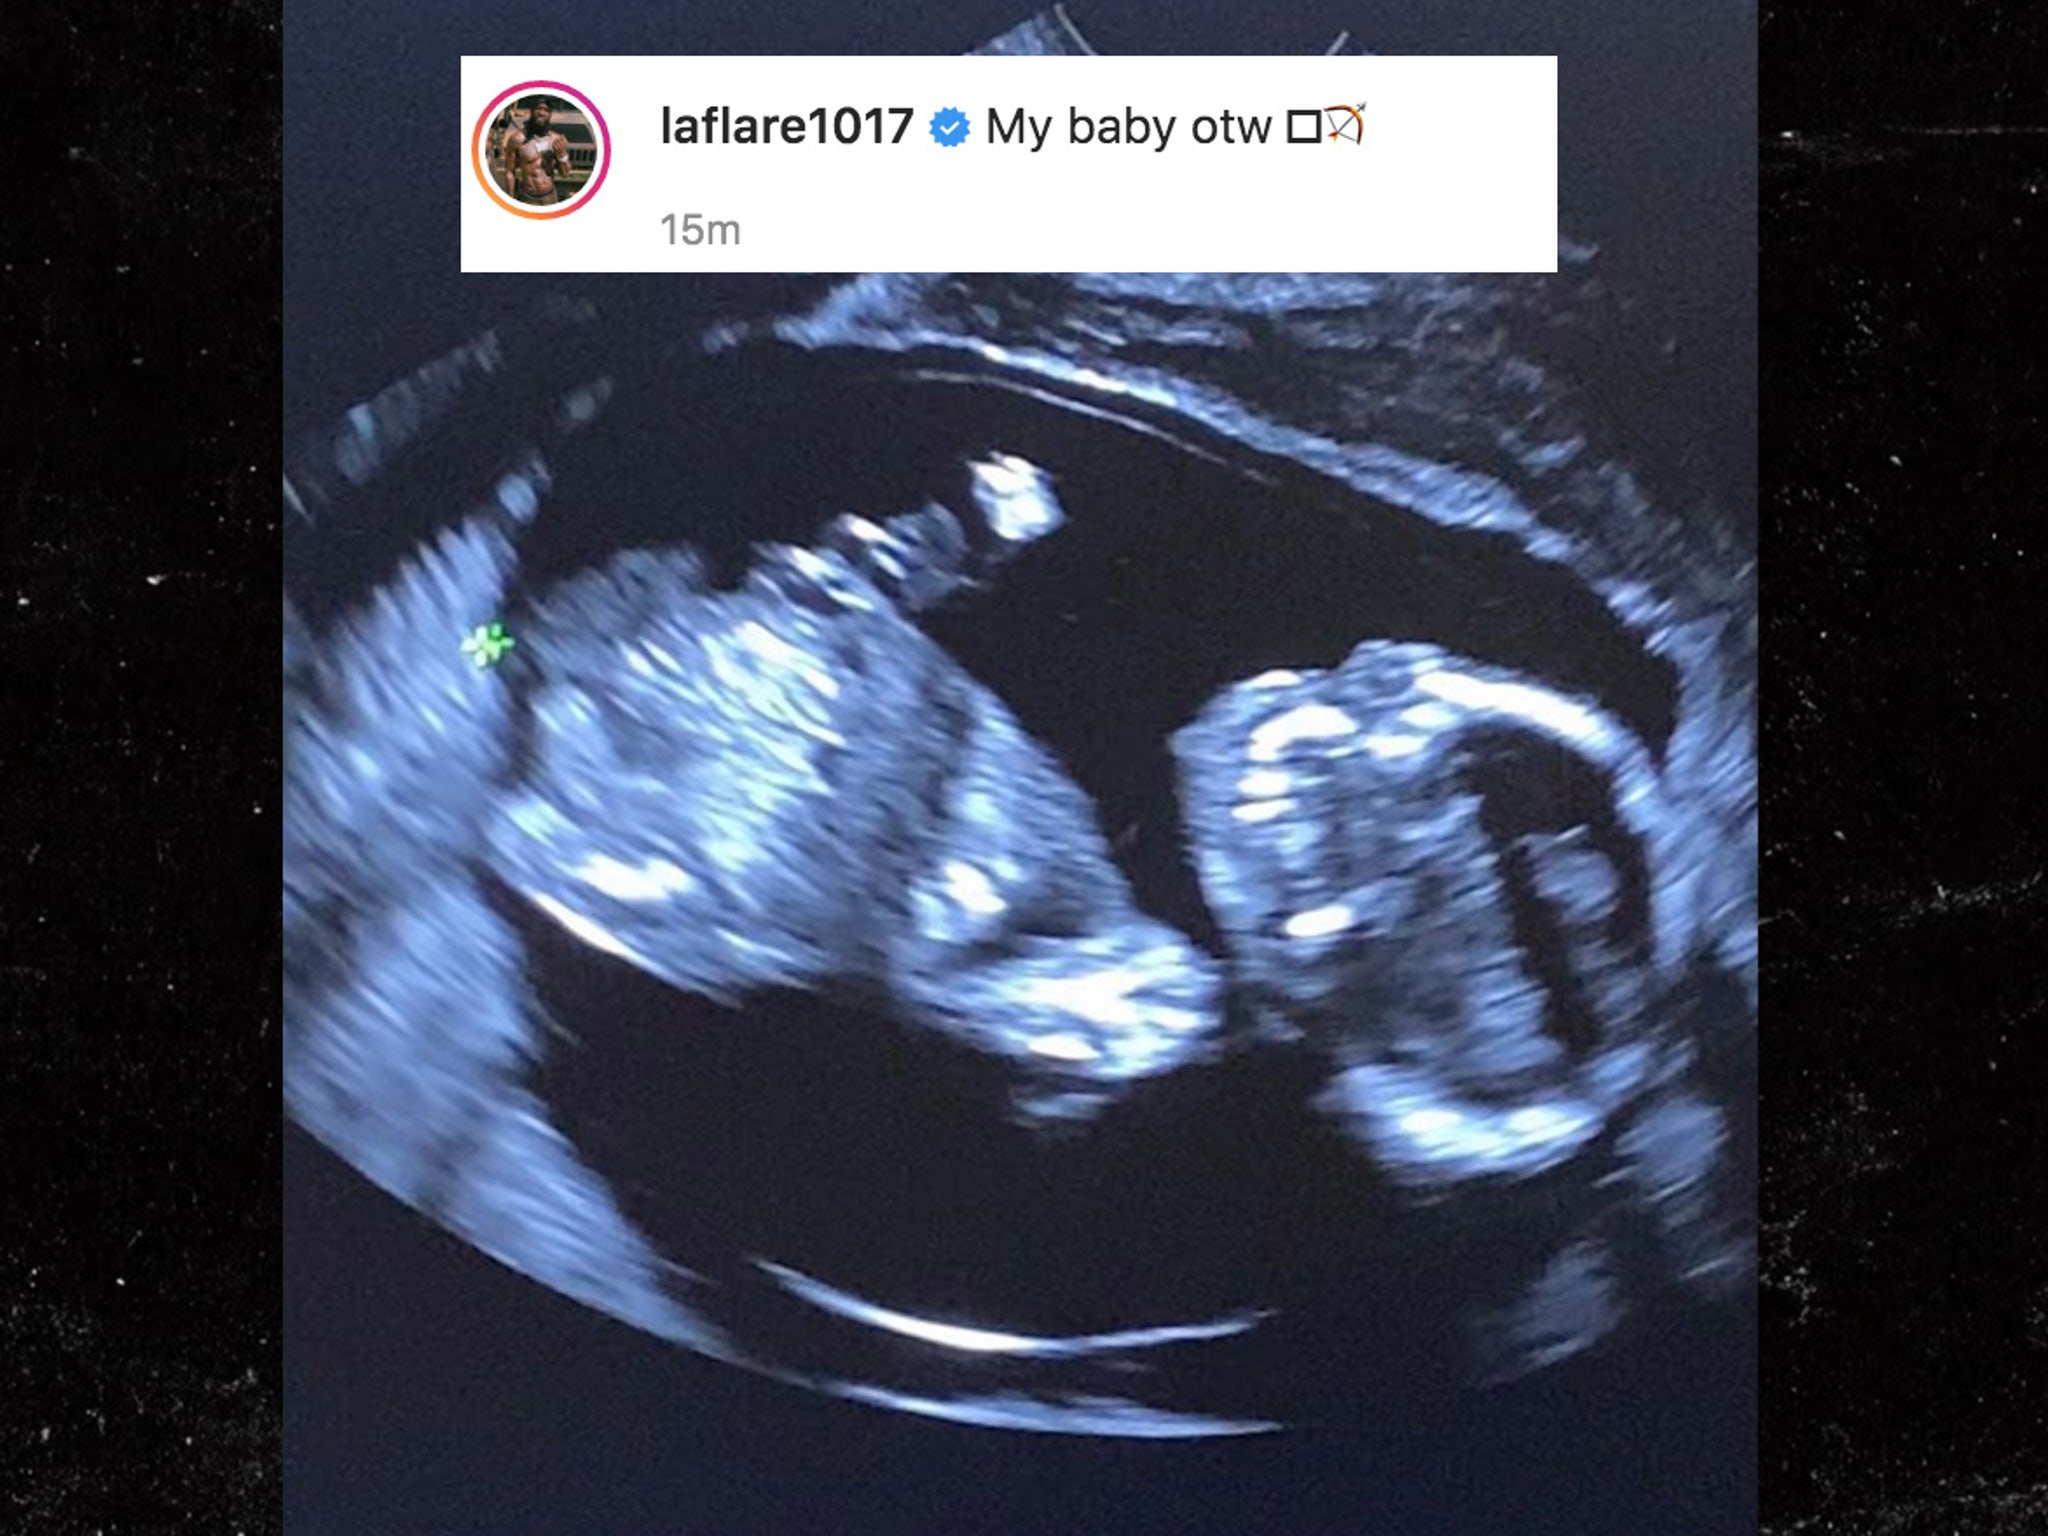 Gucci Mane Shares Baby Sonogram Photos